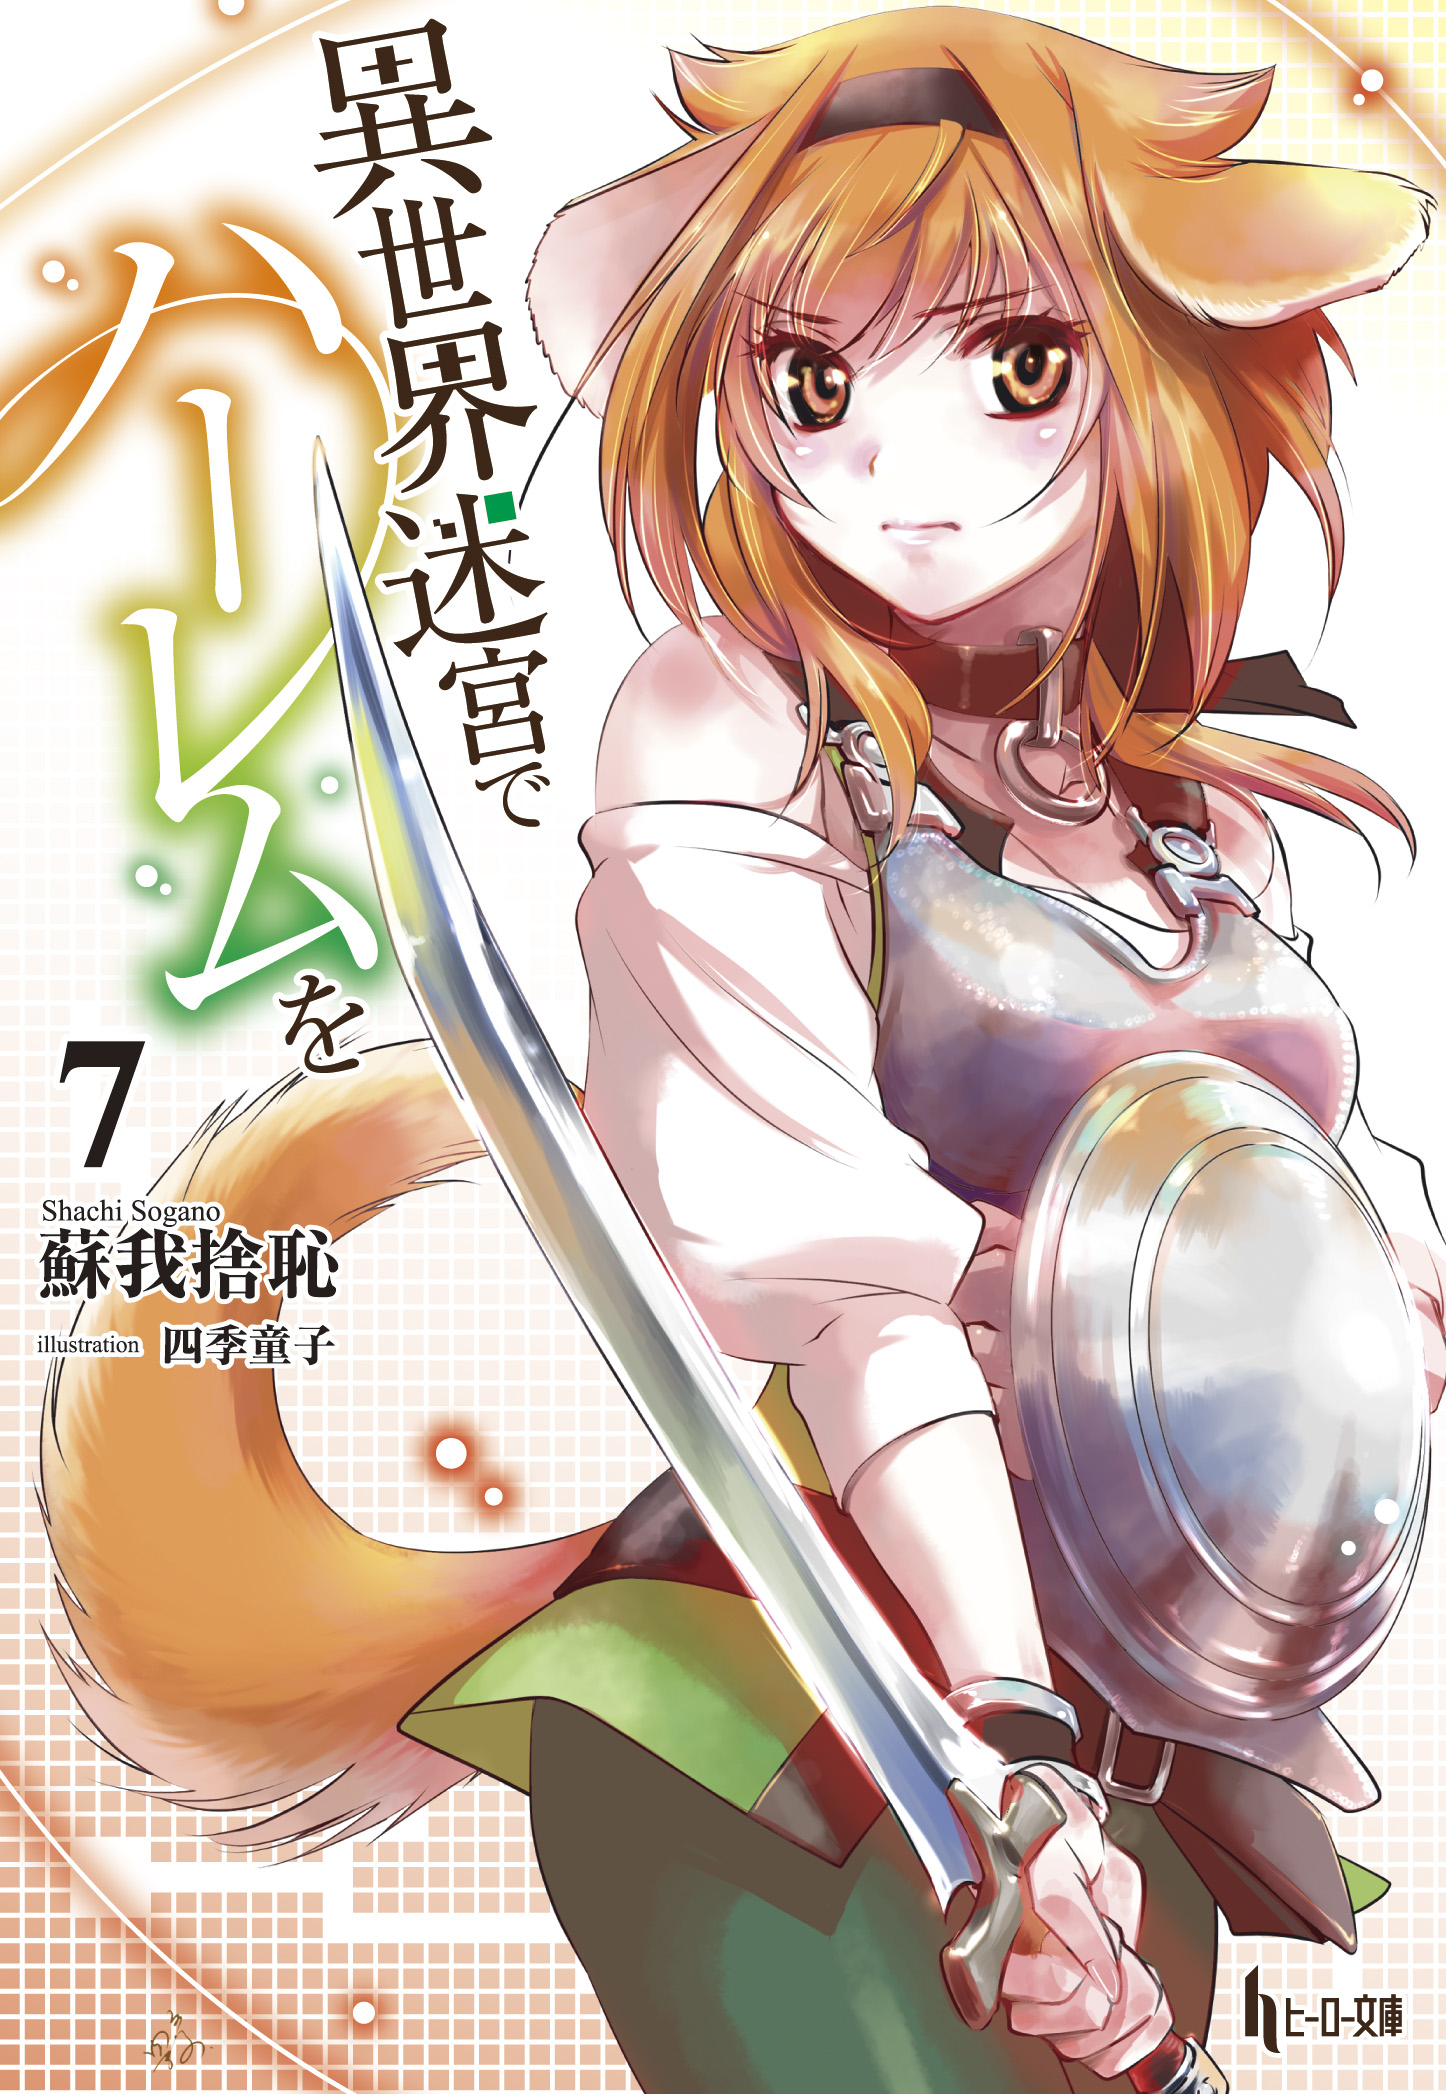 Isekai Meikyuu De Harem O Light Novel Illustrations - Category ...